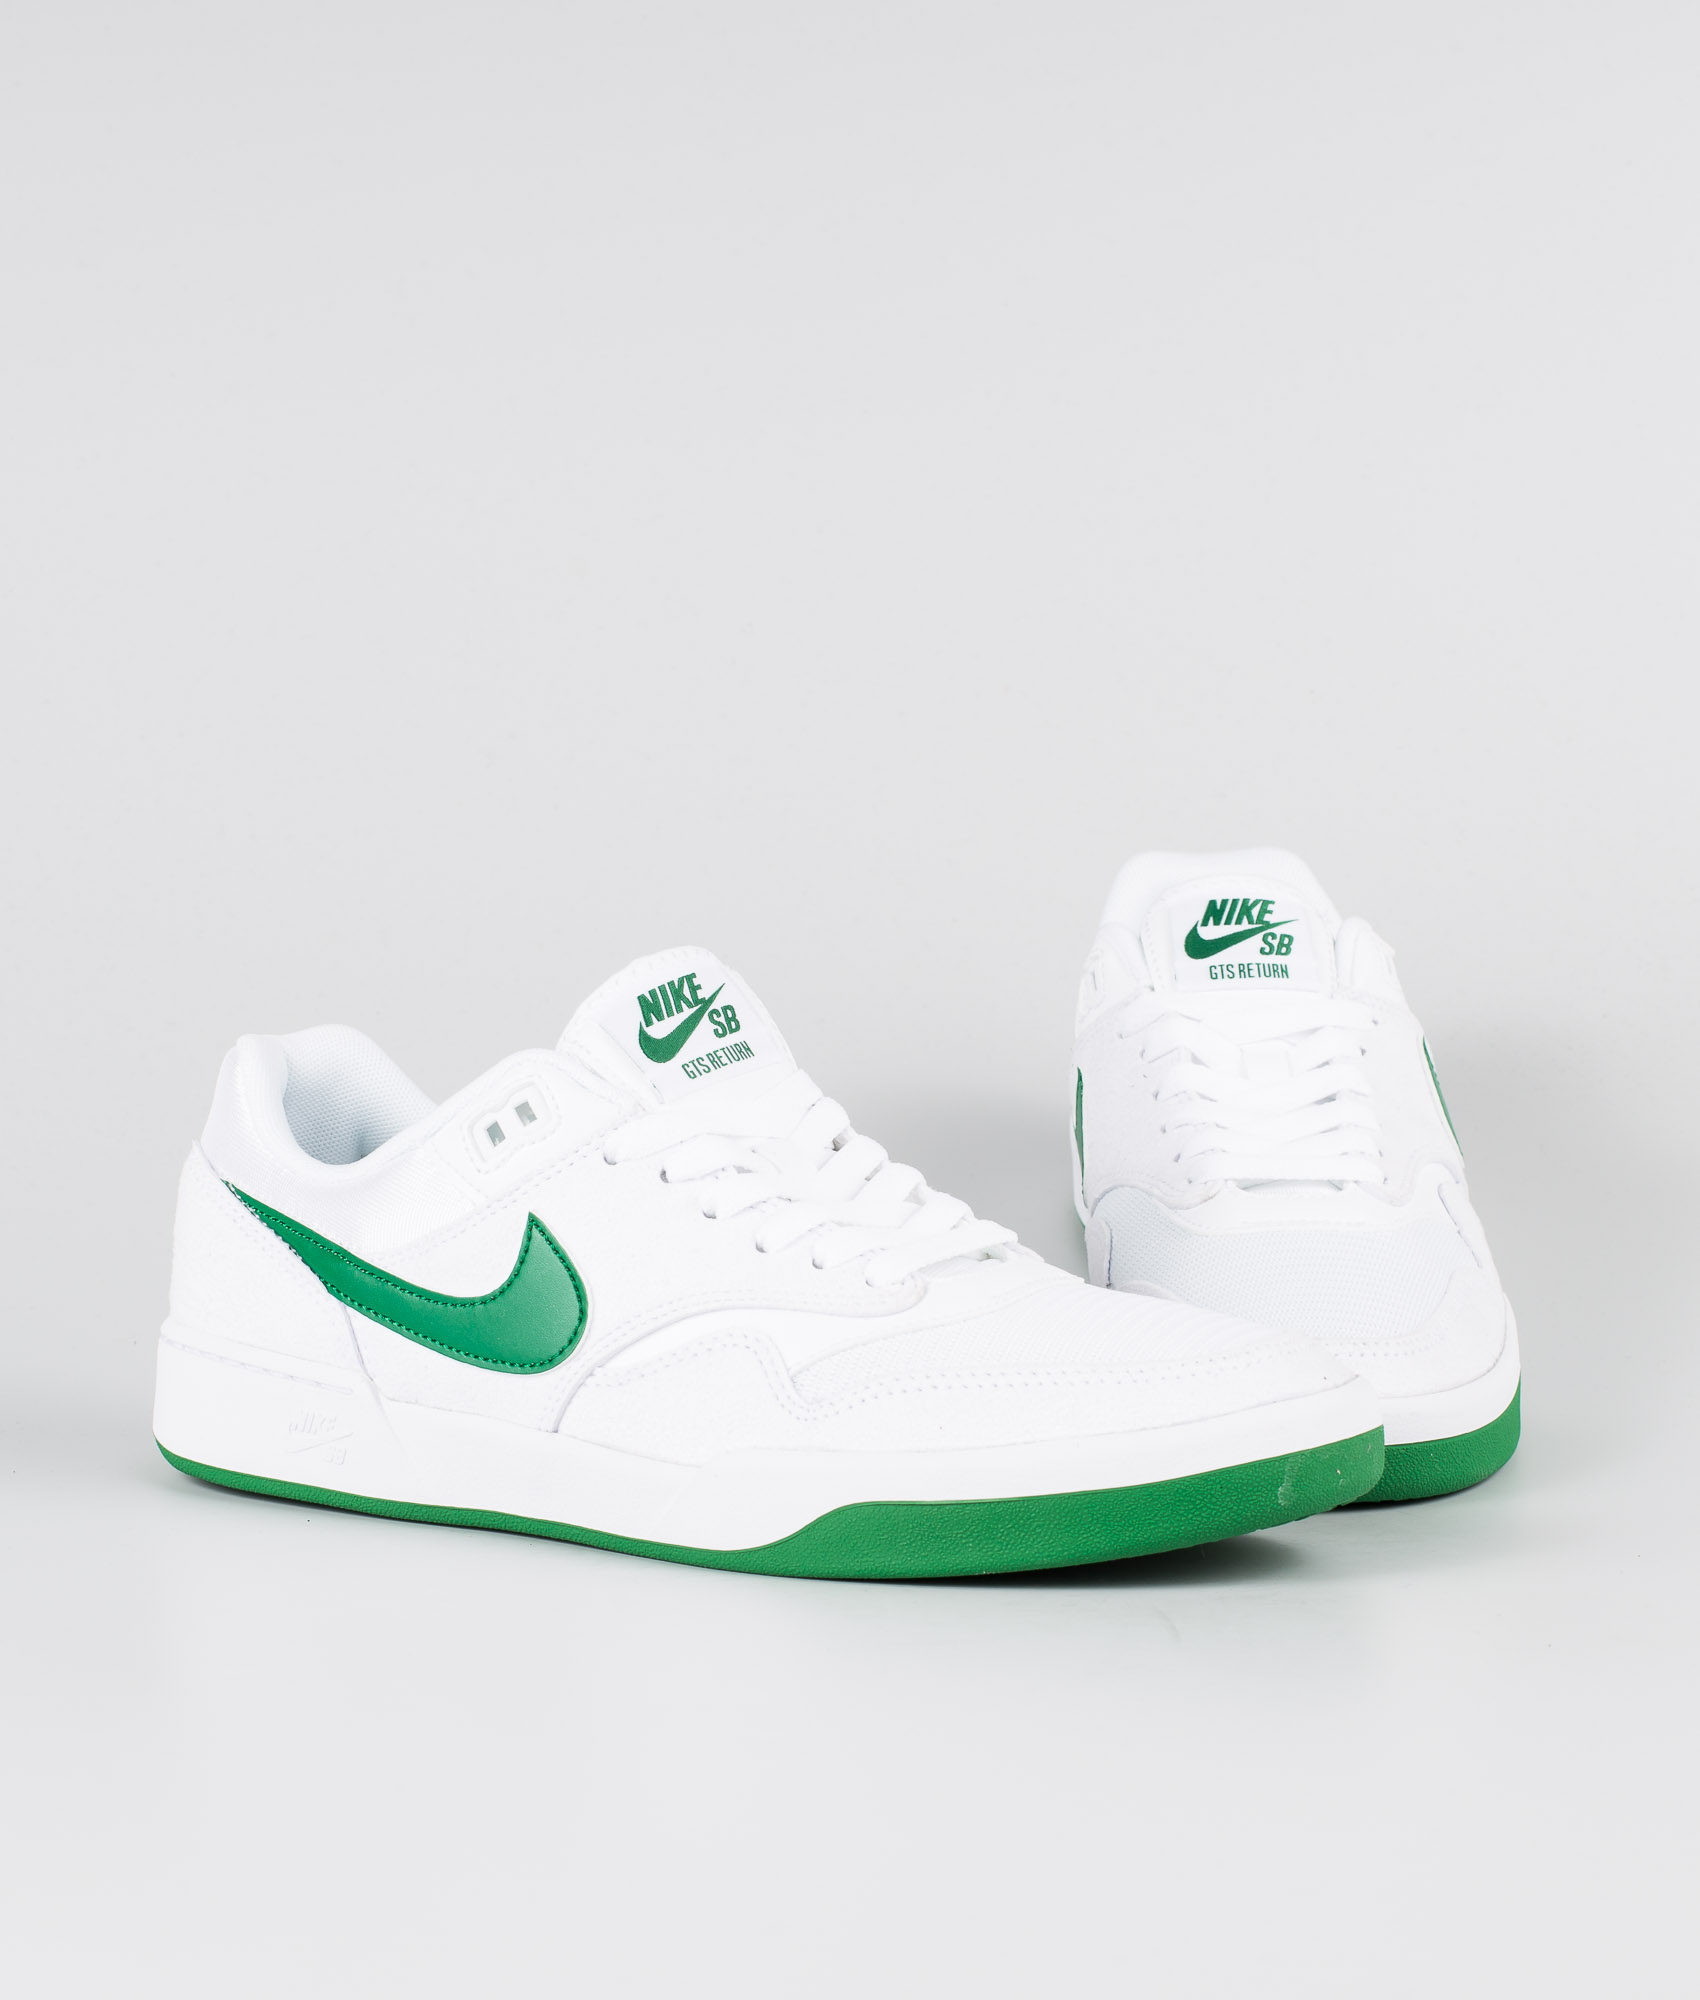 nike shoes white green